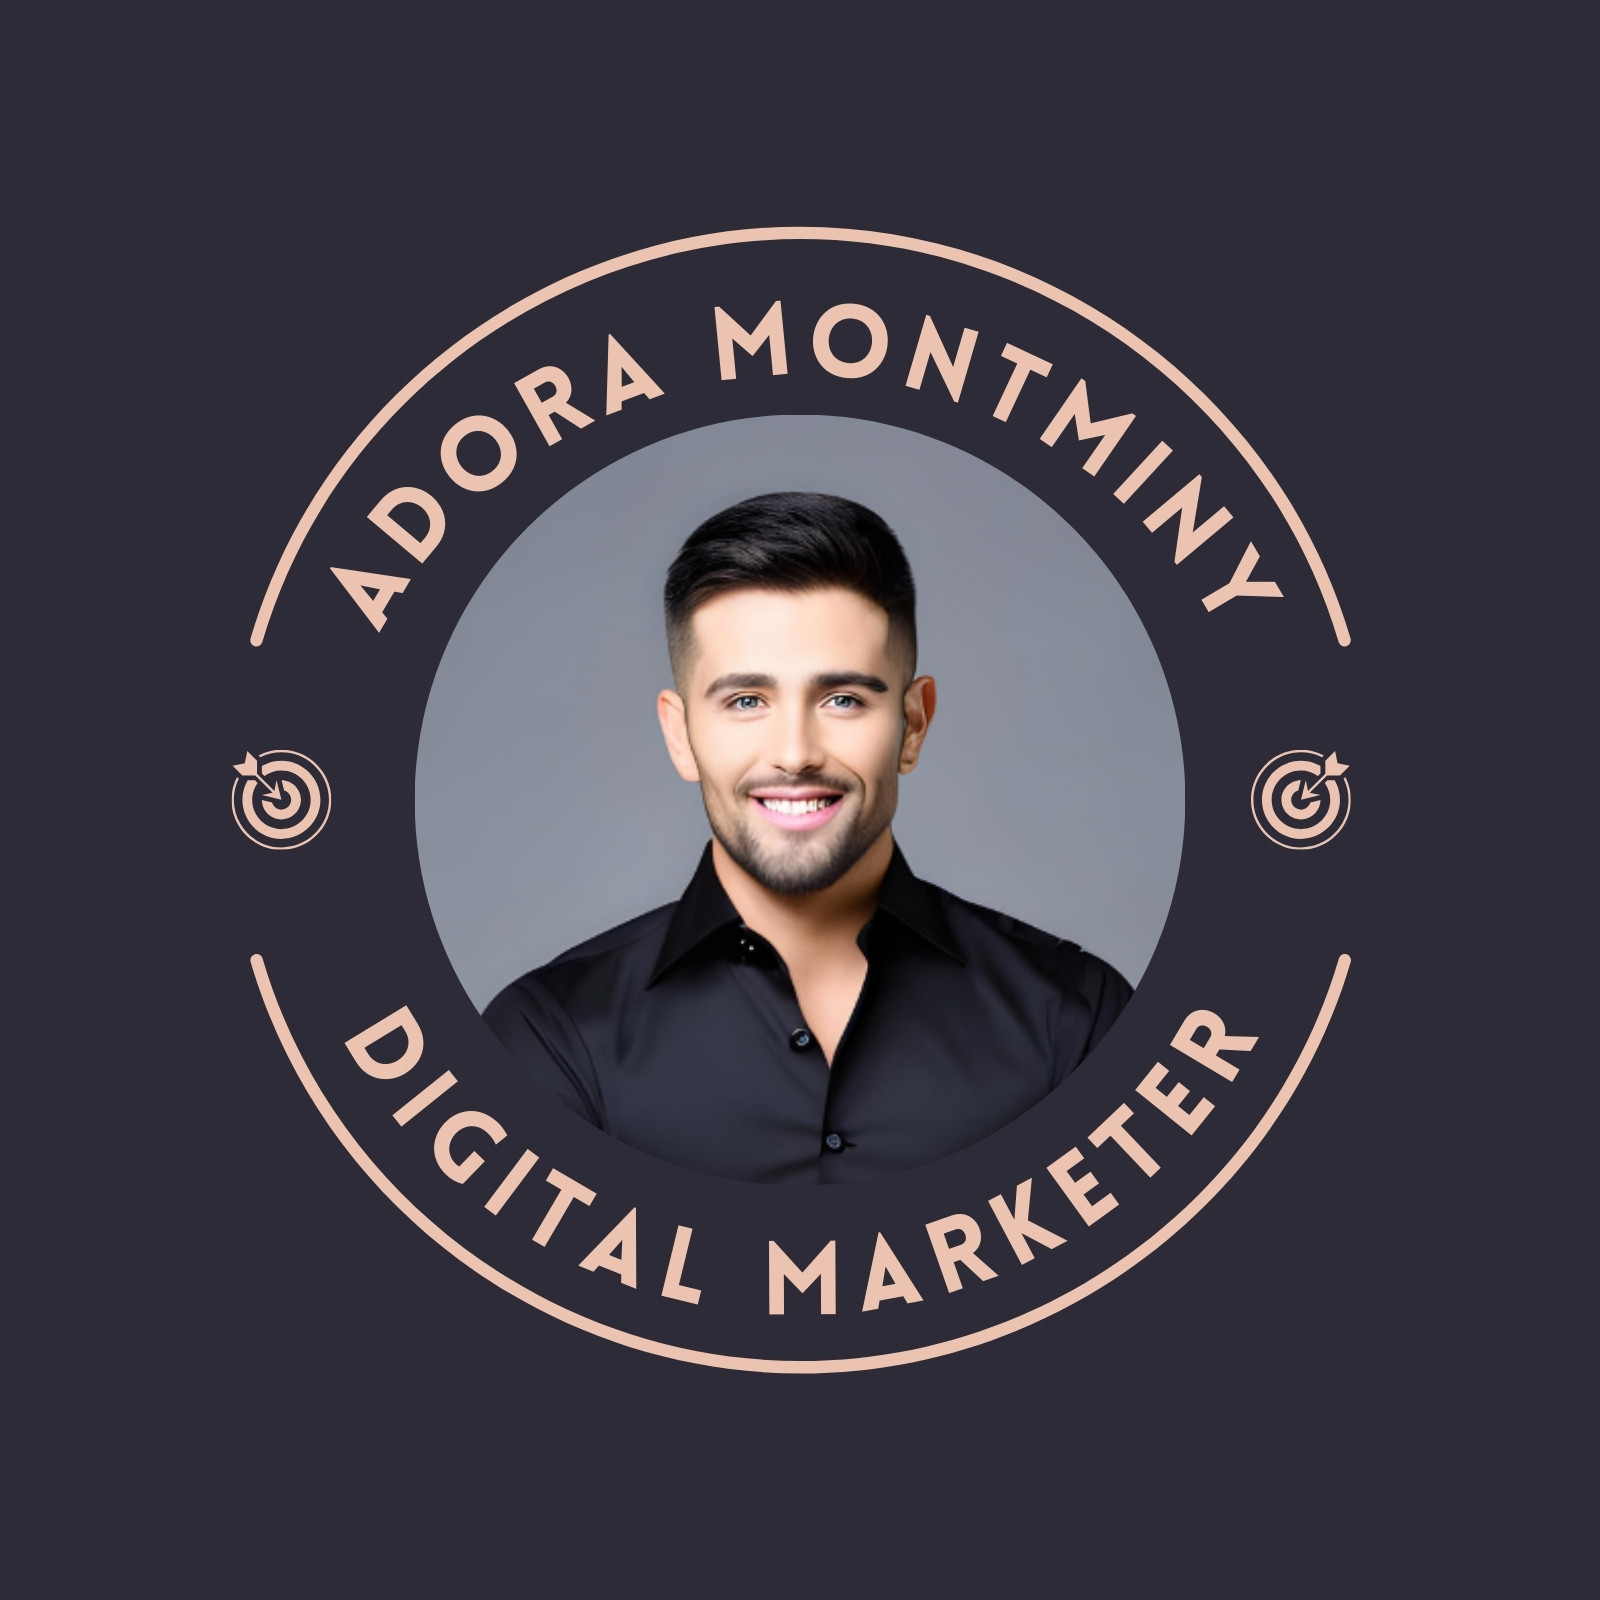 Digital Marketer LinkedIn Profile Picture